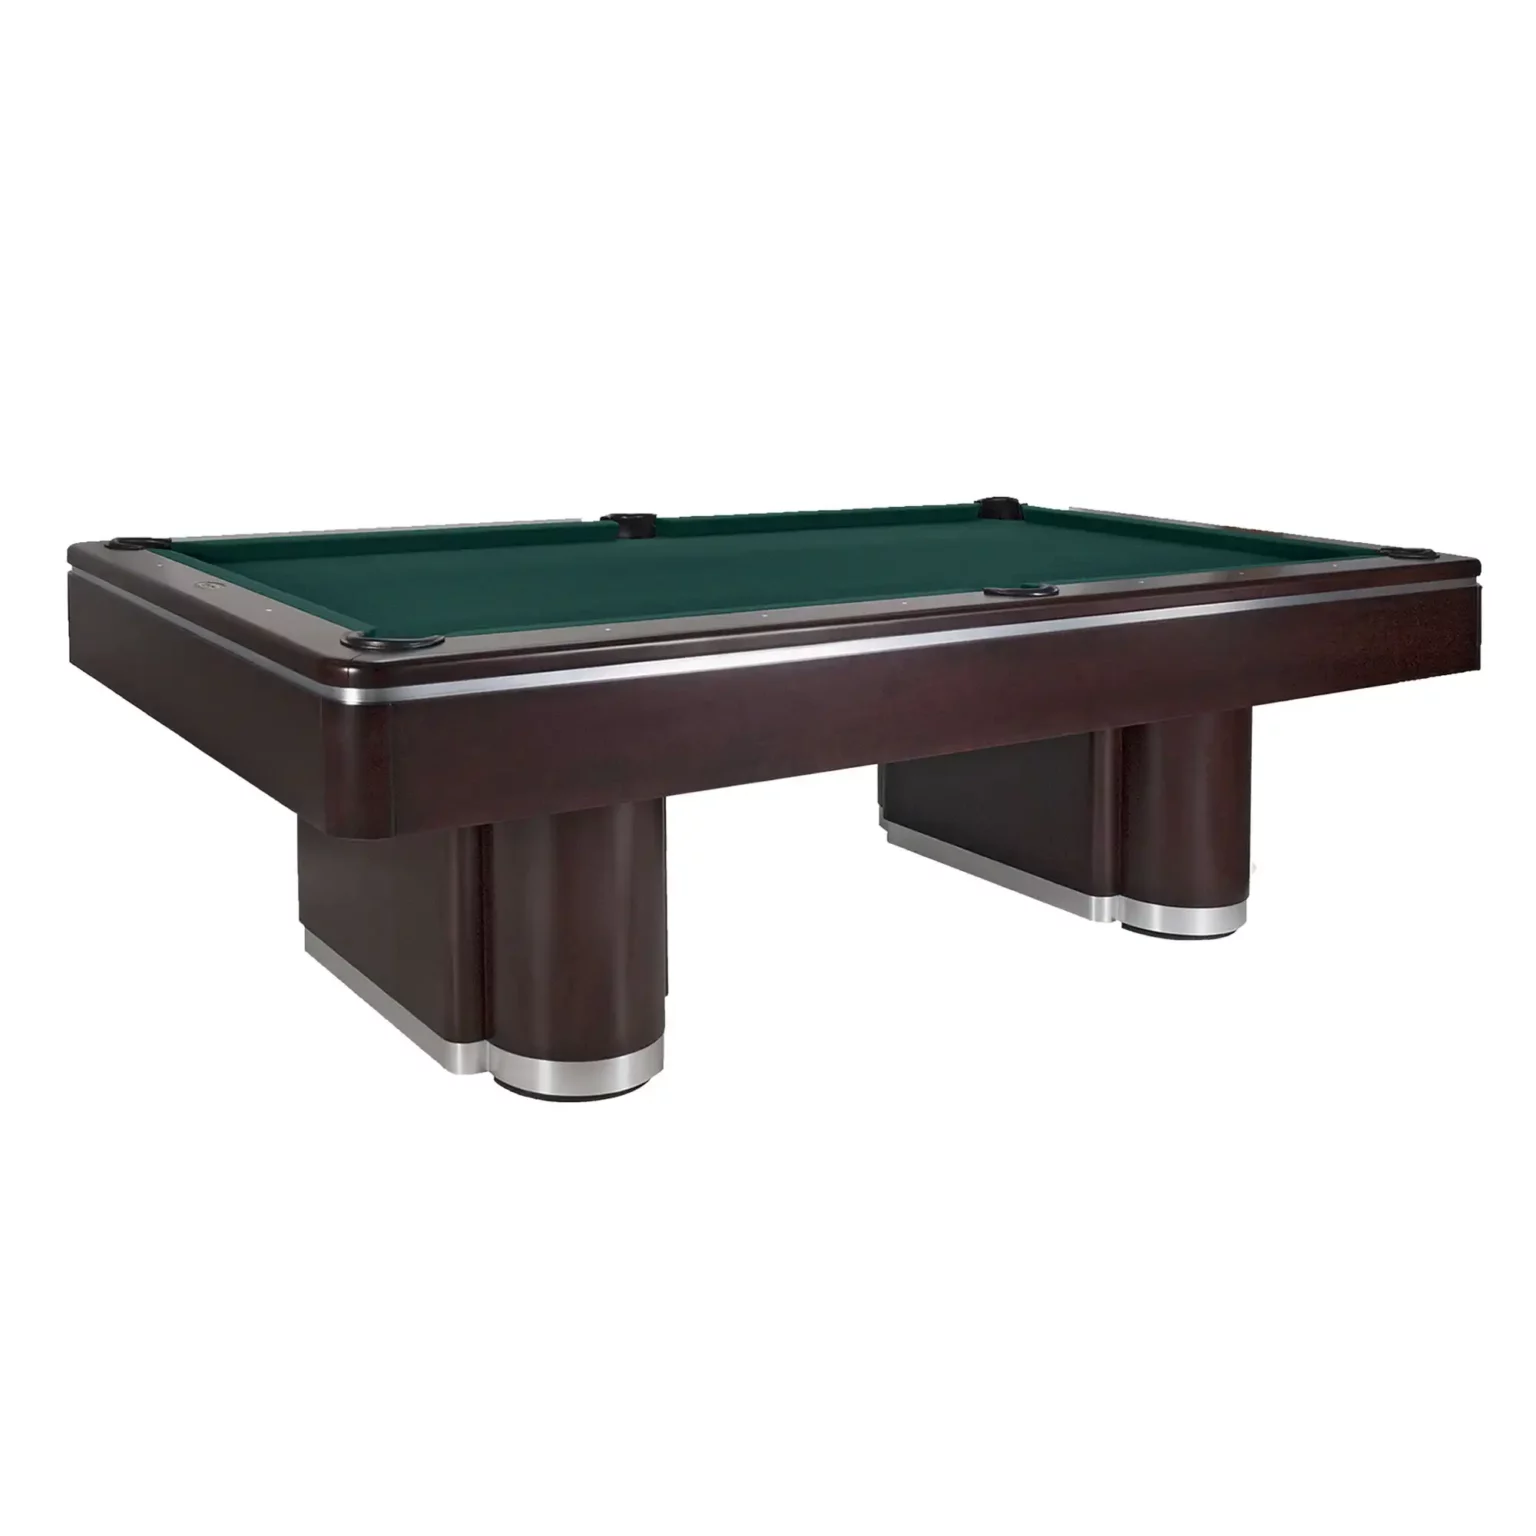 Olhausen Plaza pool table